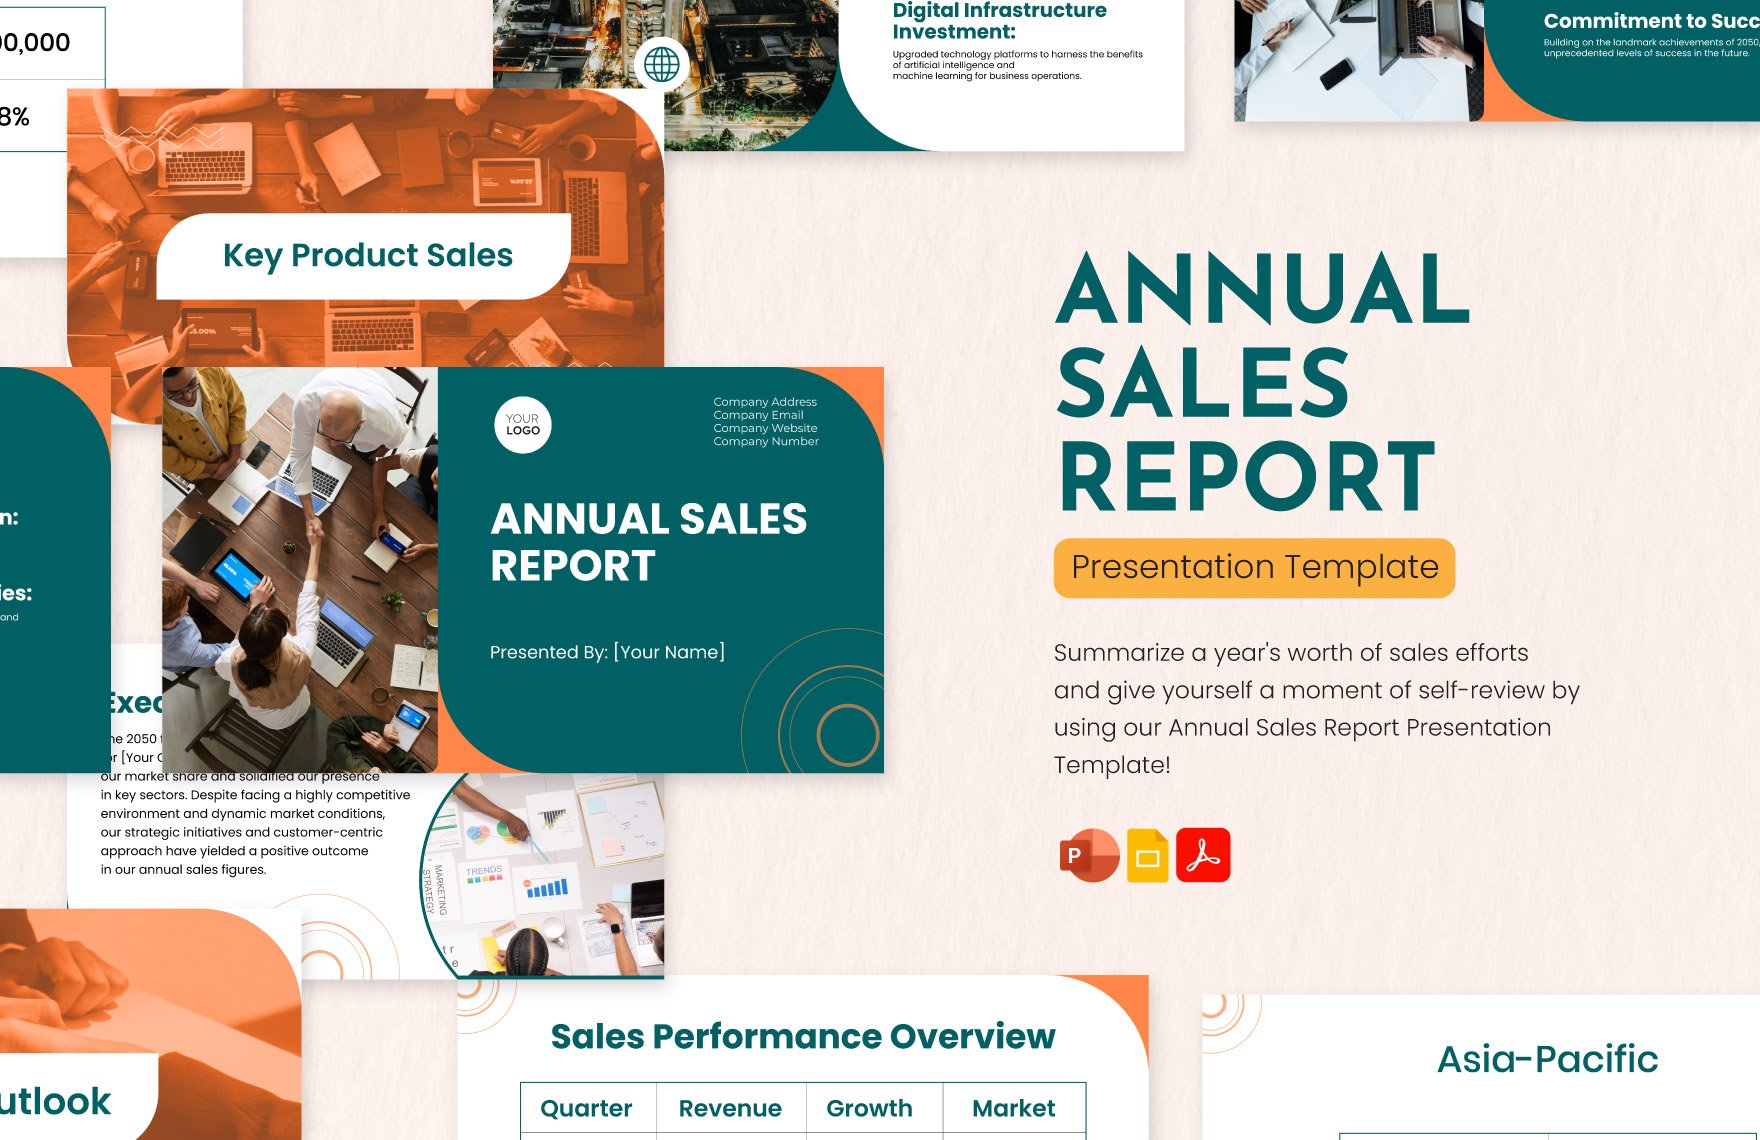 Annual Sales Report Presentation Template